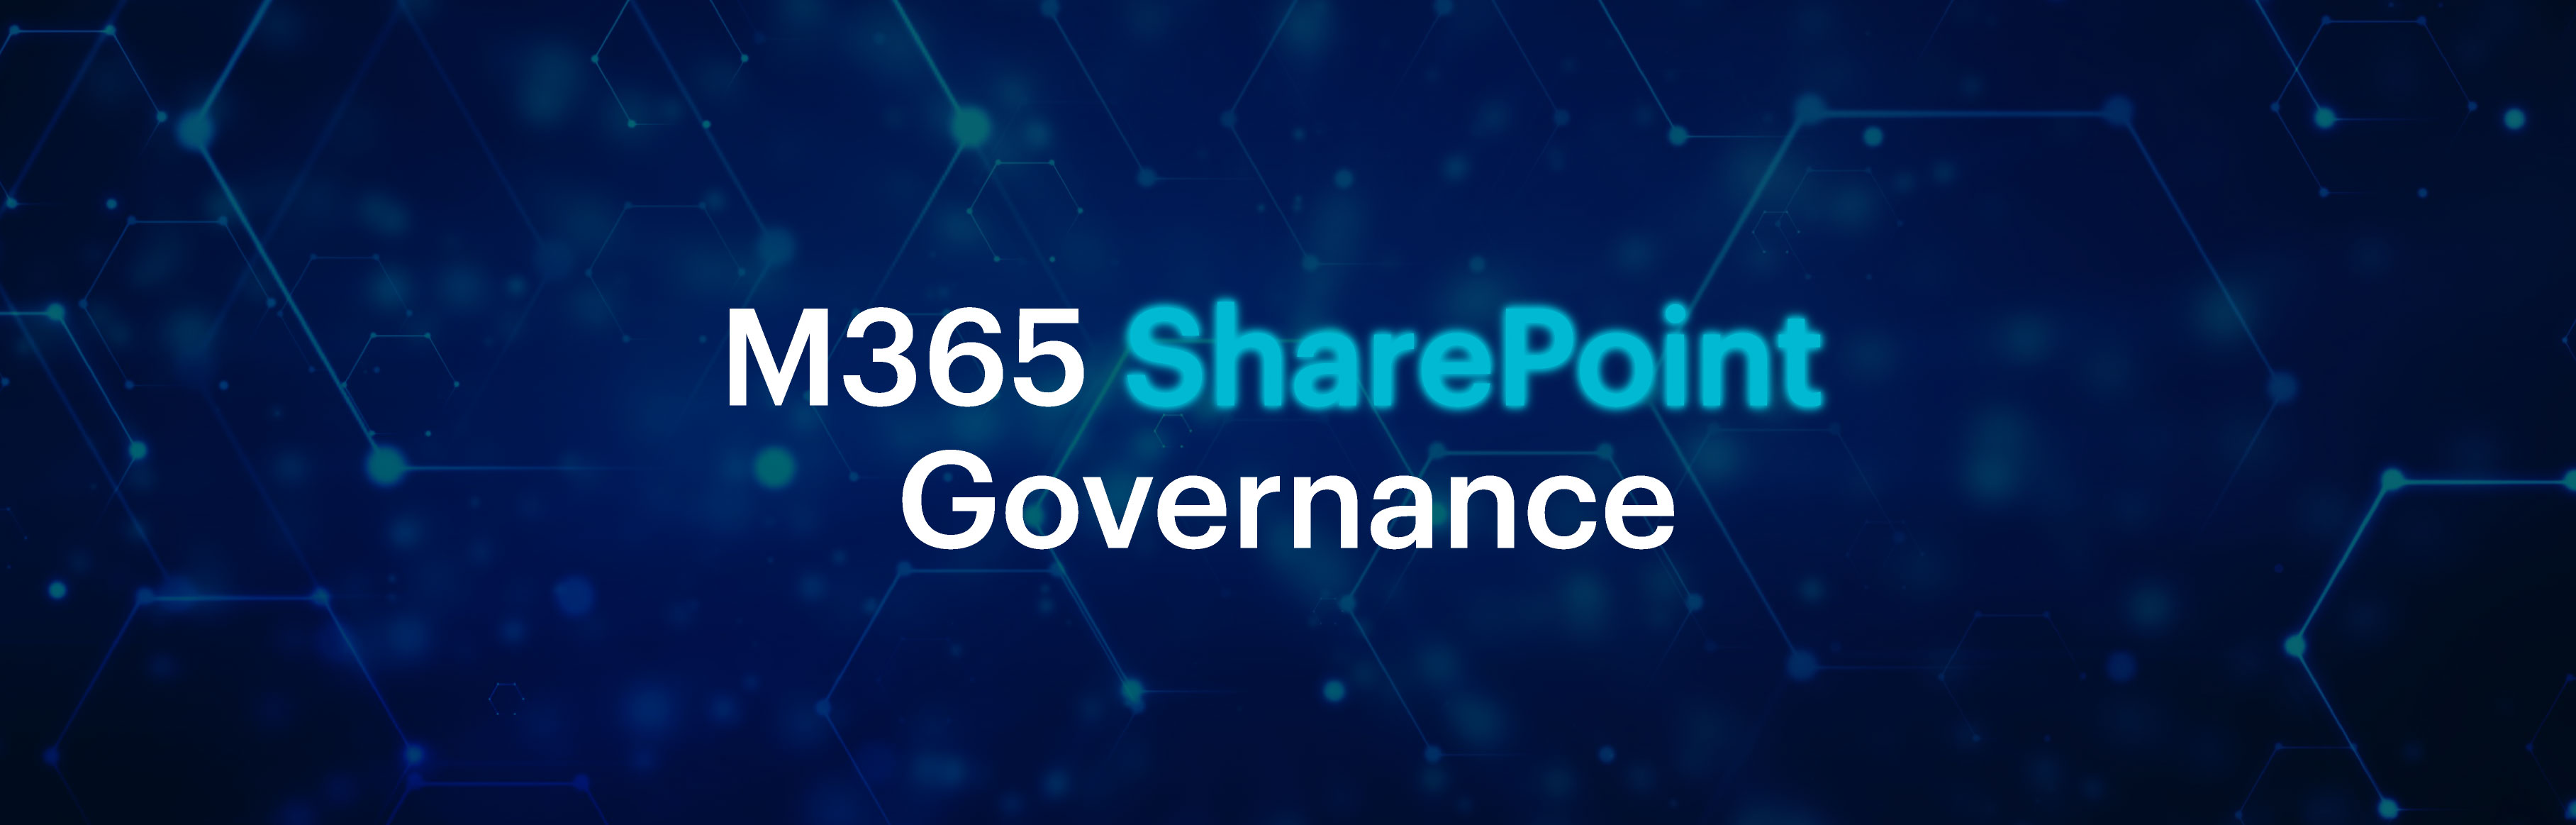 M365 SharePoint Governance